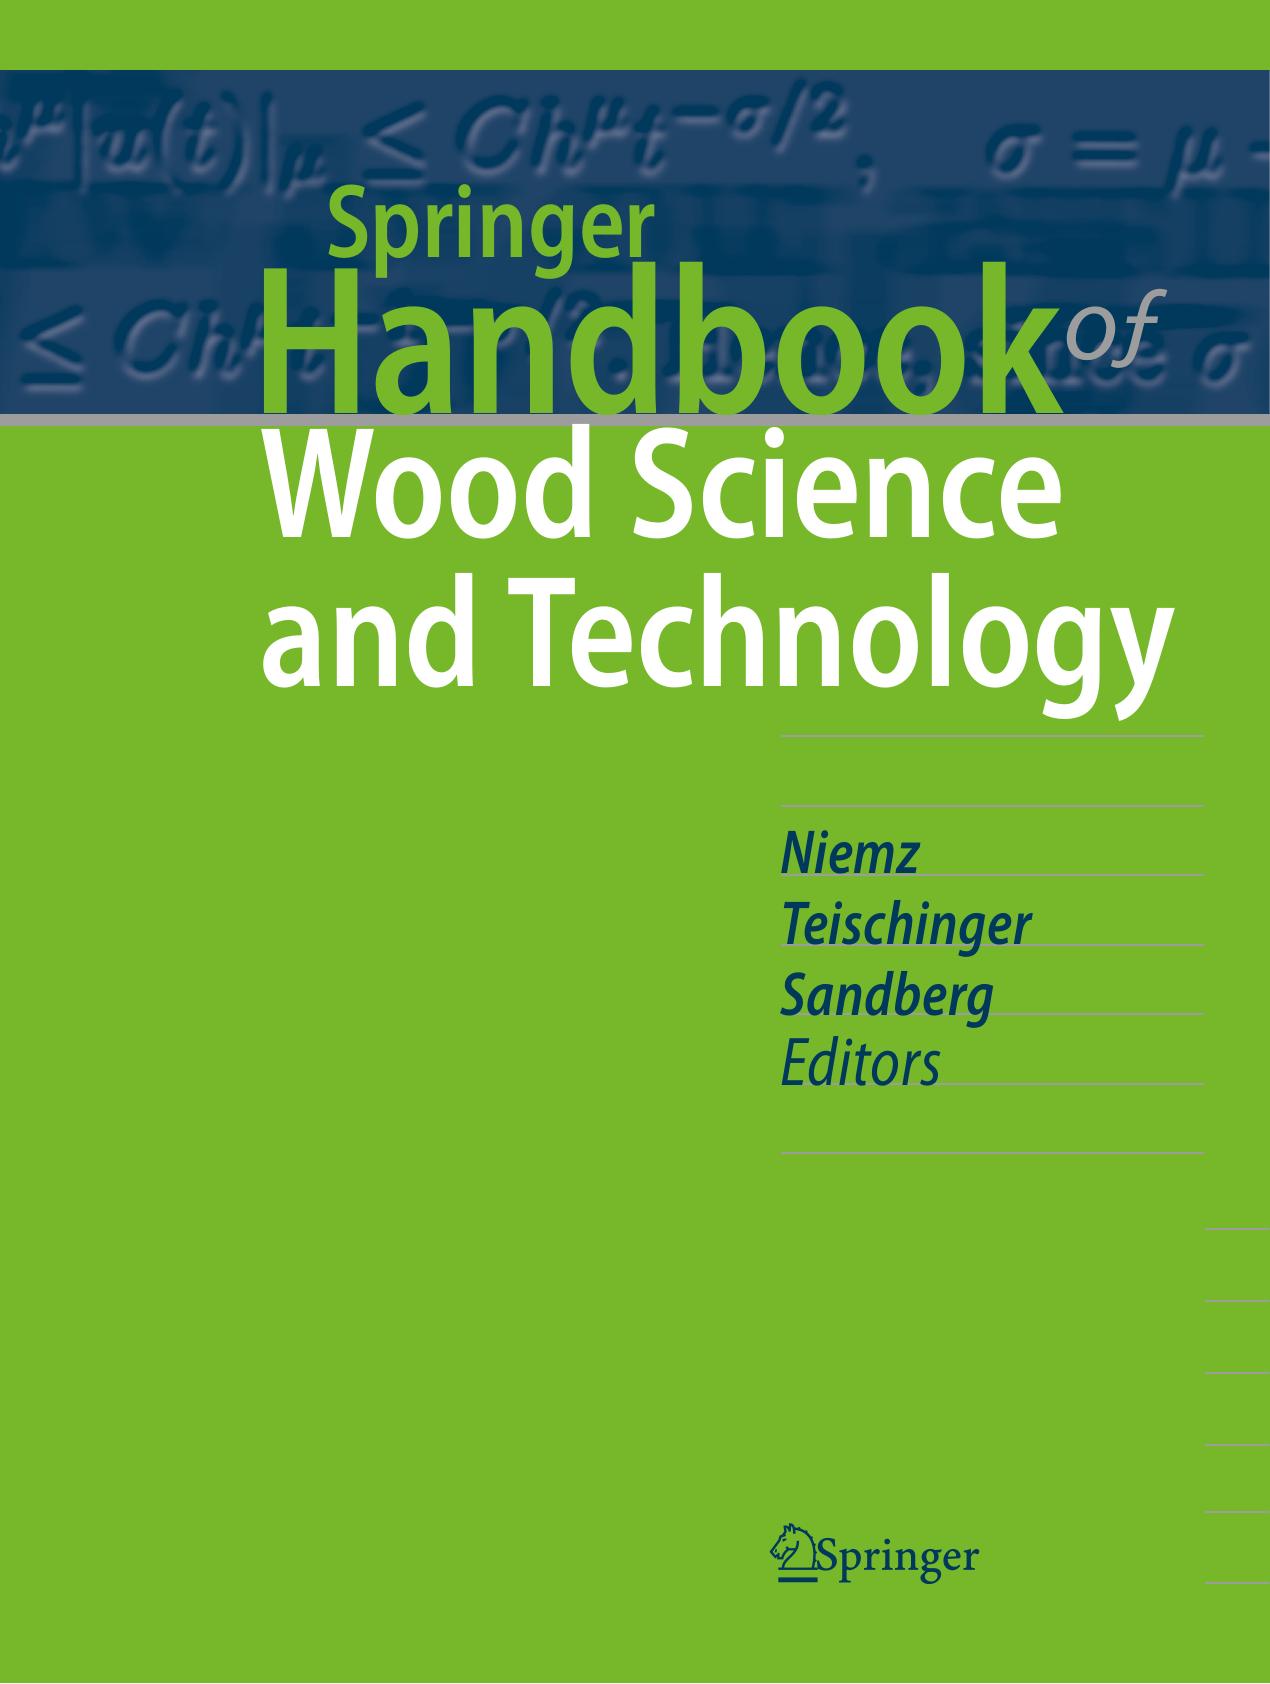 Springer Handbook of Wood Science and Technology by Peter Niemz; Alfred Teischinger; Dick Sandberg